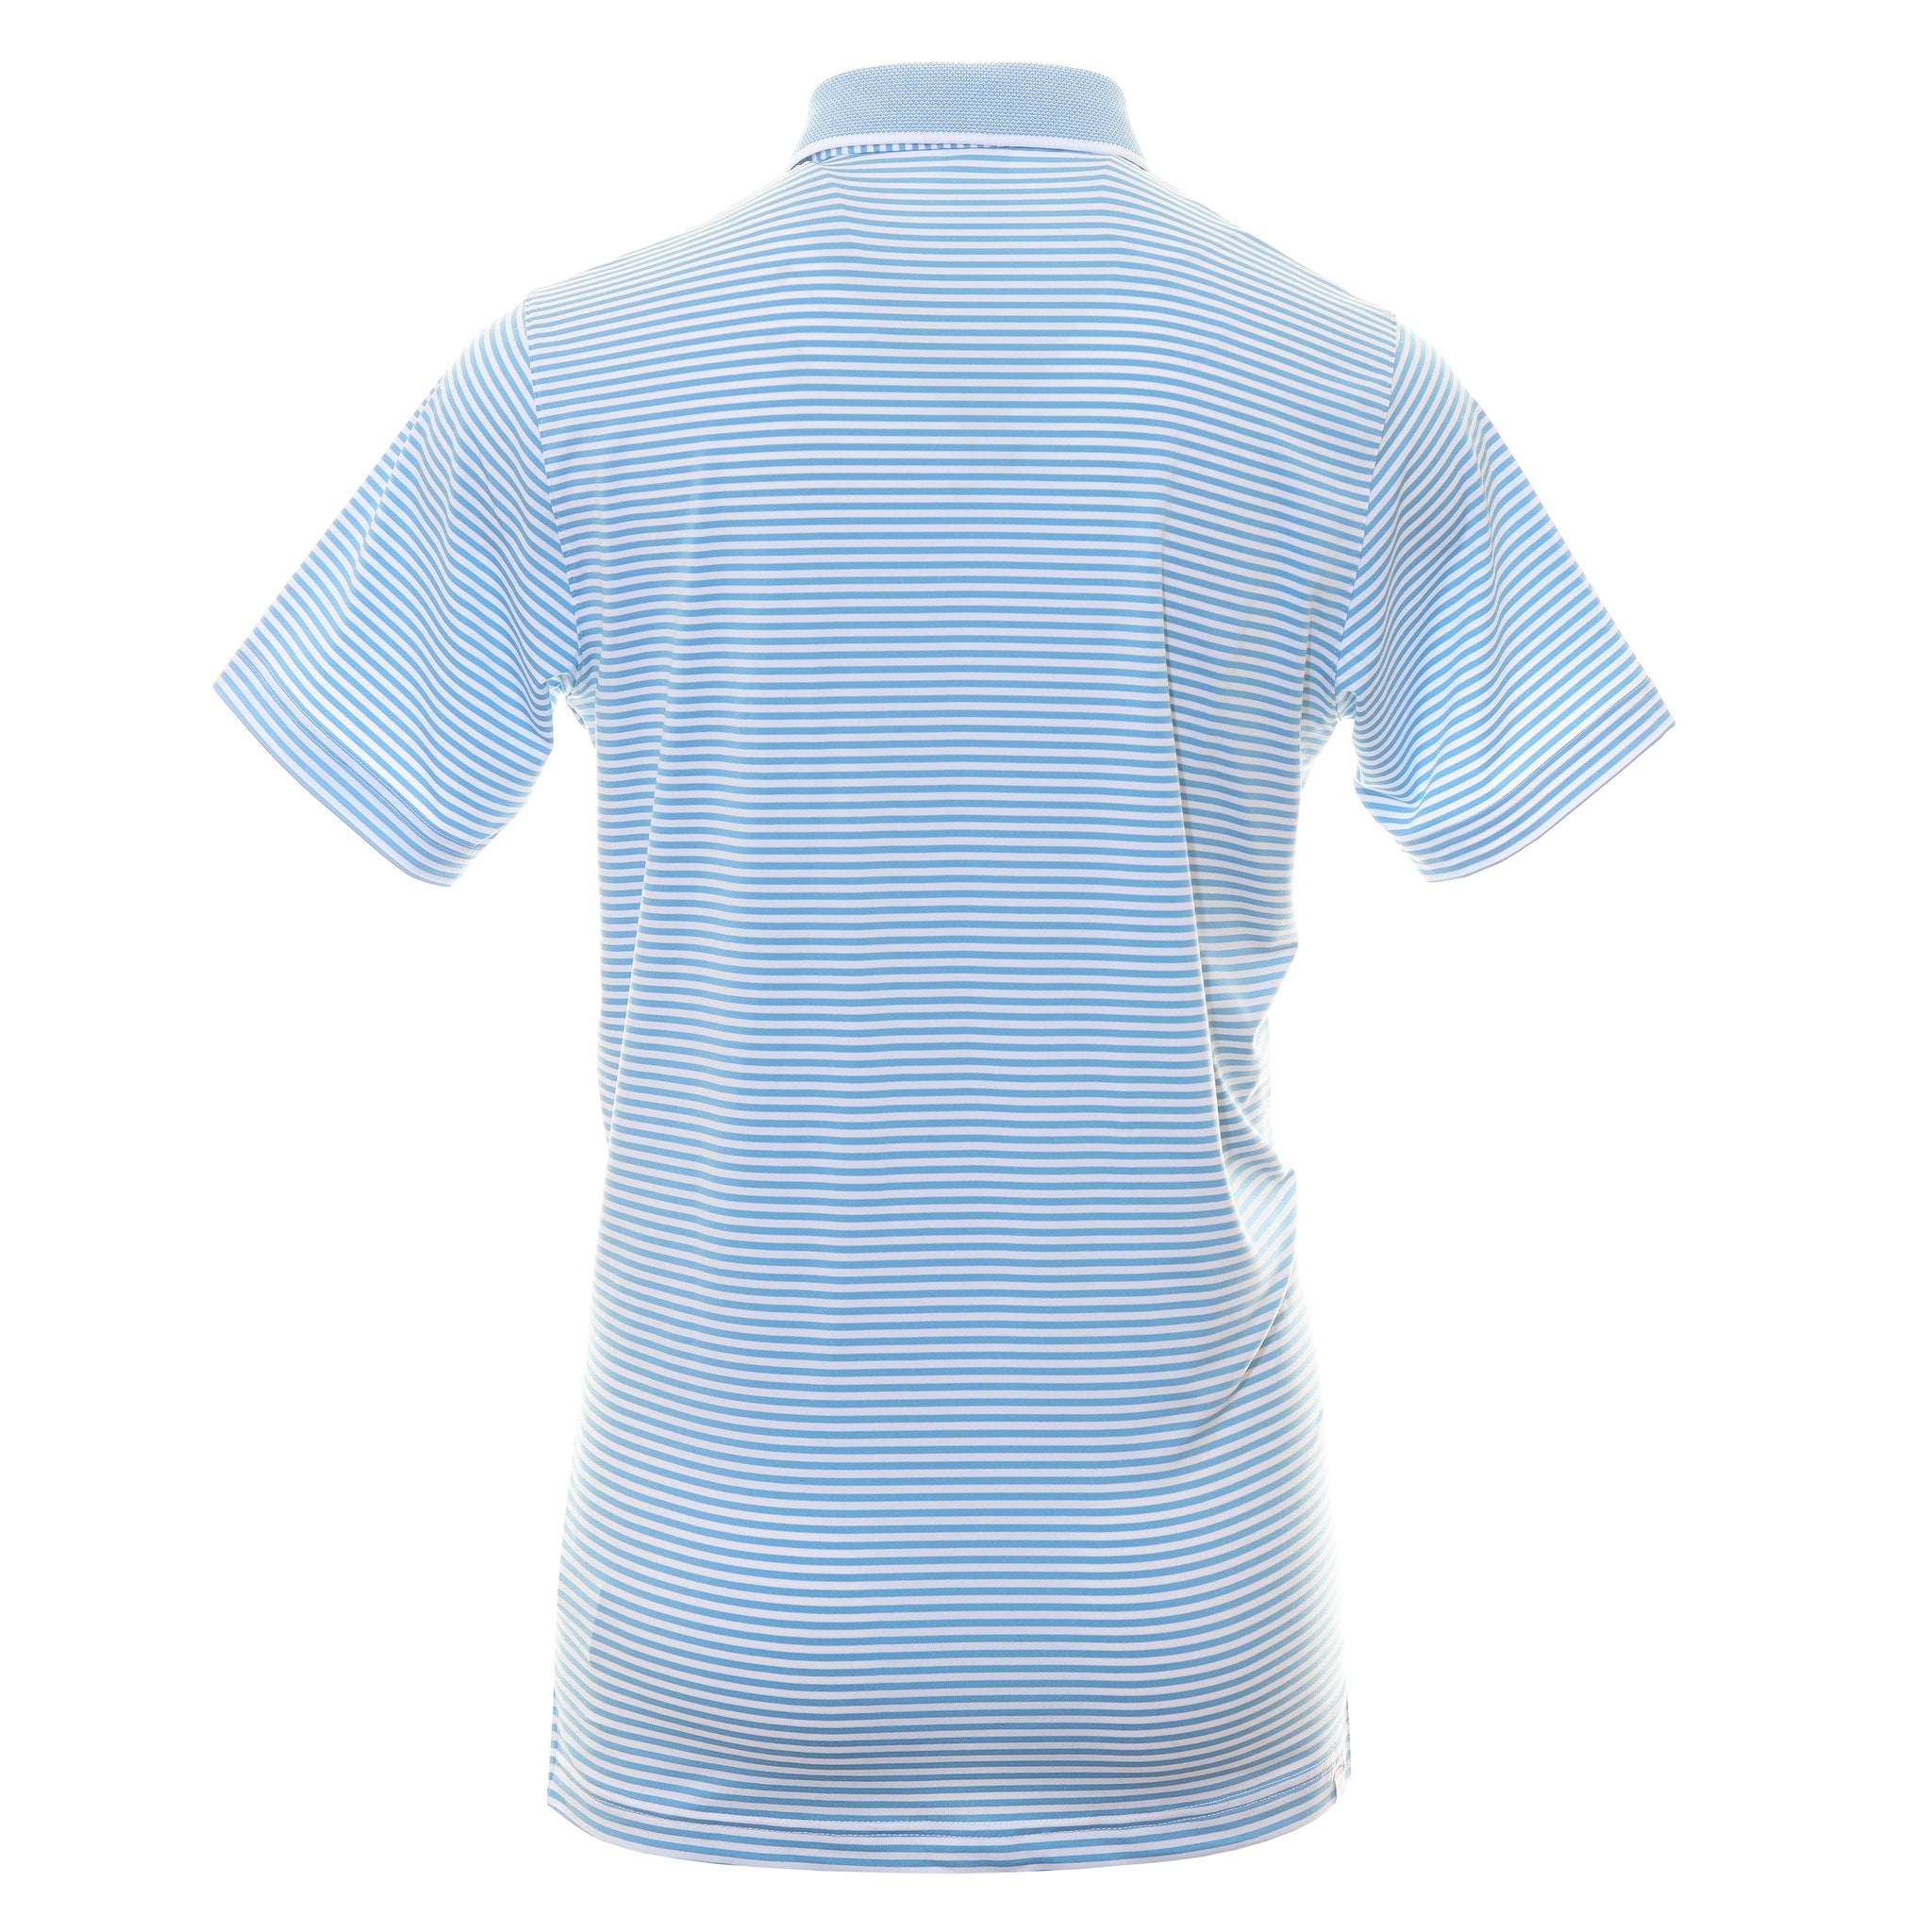 puma-golf-x-arnold-palmer-traditions-shirt-537482-regal-blue-white-glow-05